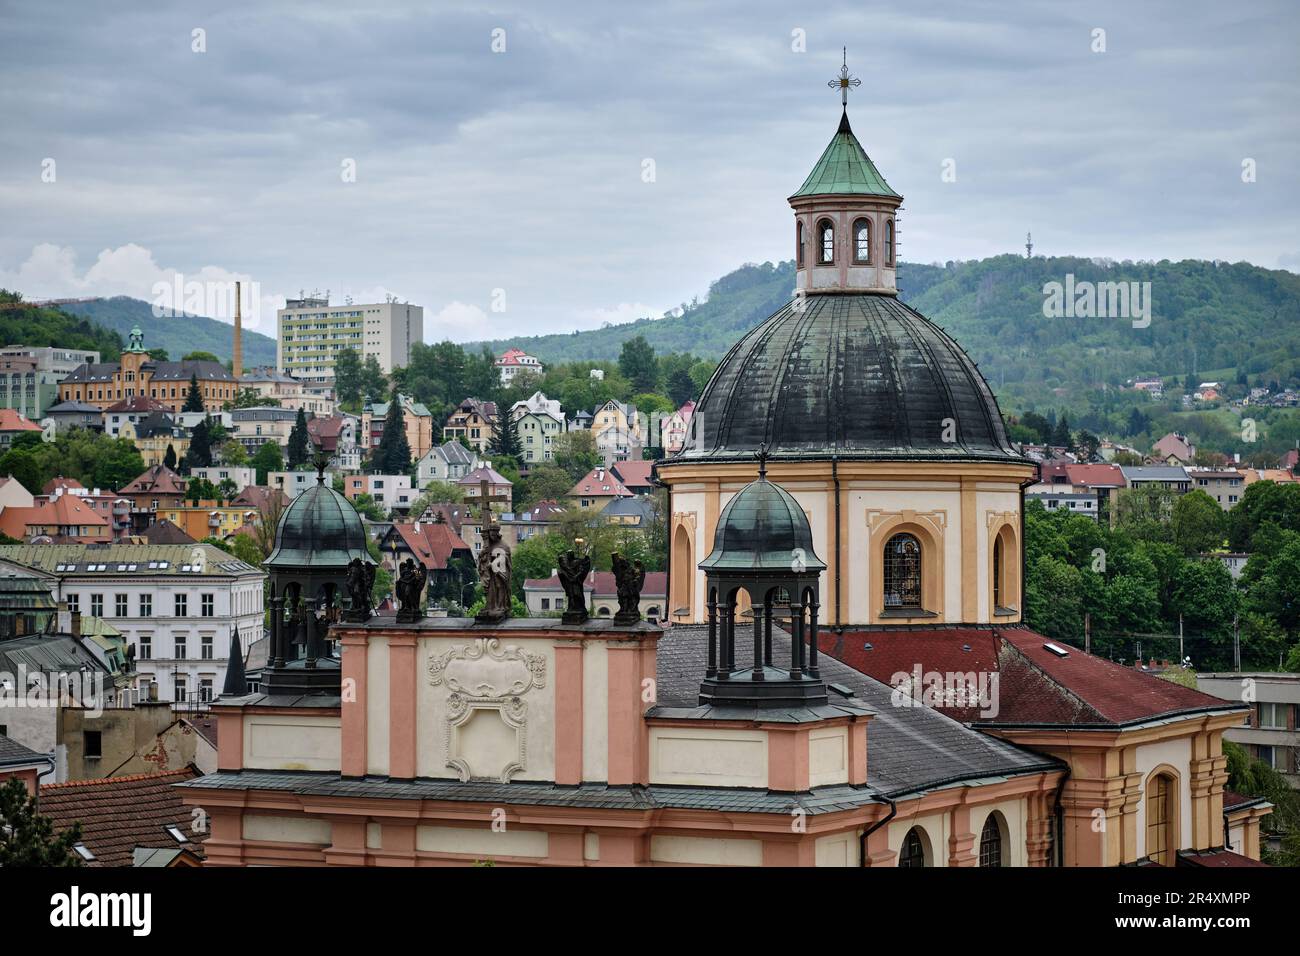 High view of Decin (Tetschen), Czech Republic. Old villas, baroque buildings, churches and communist-built panel block of flats. Tourist destination. Stock Photo